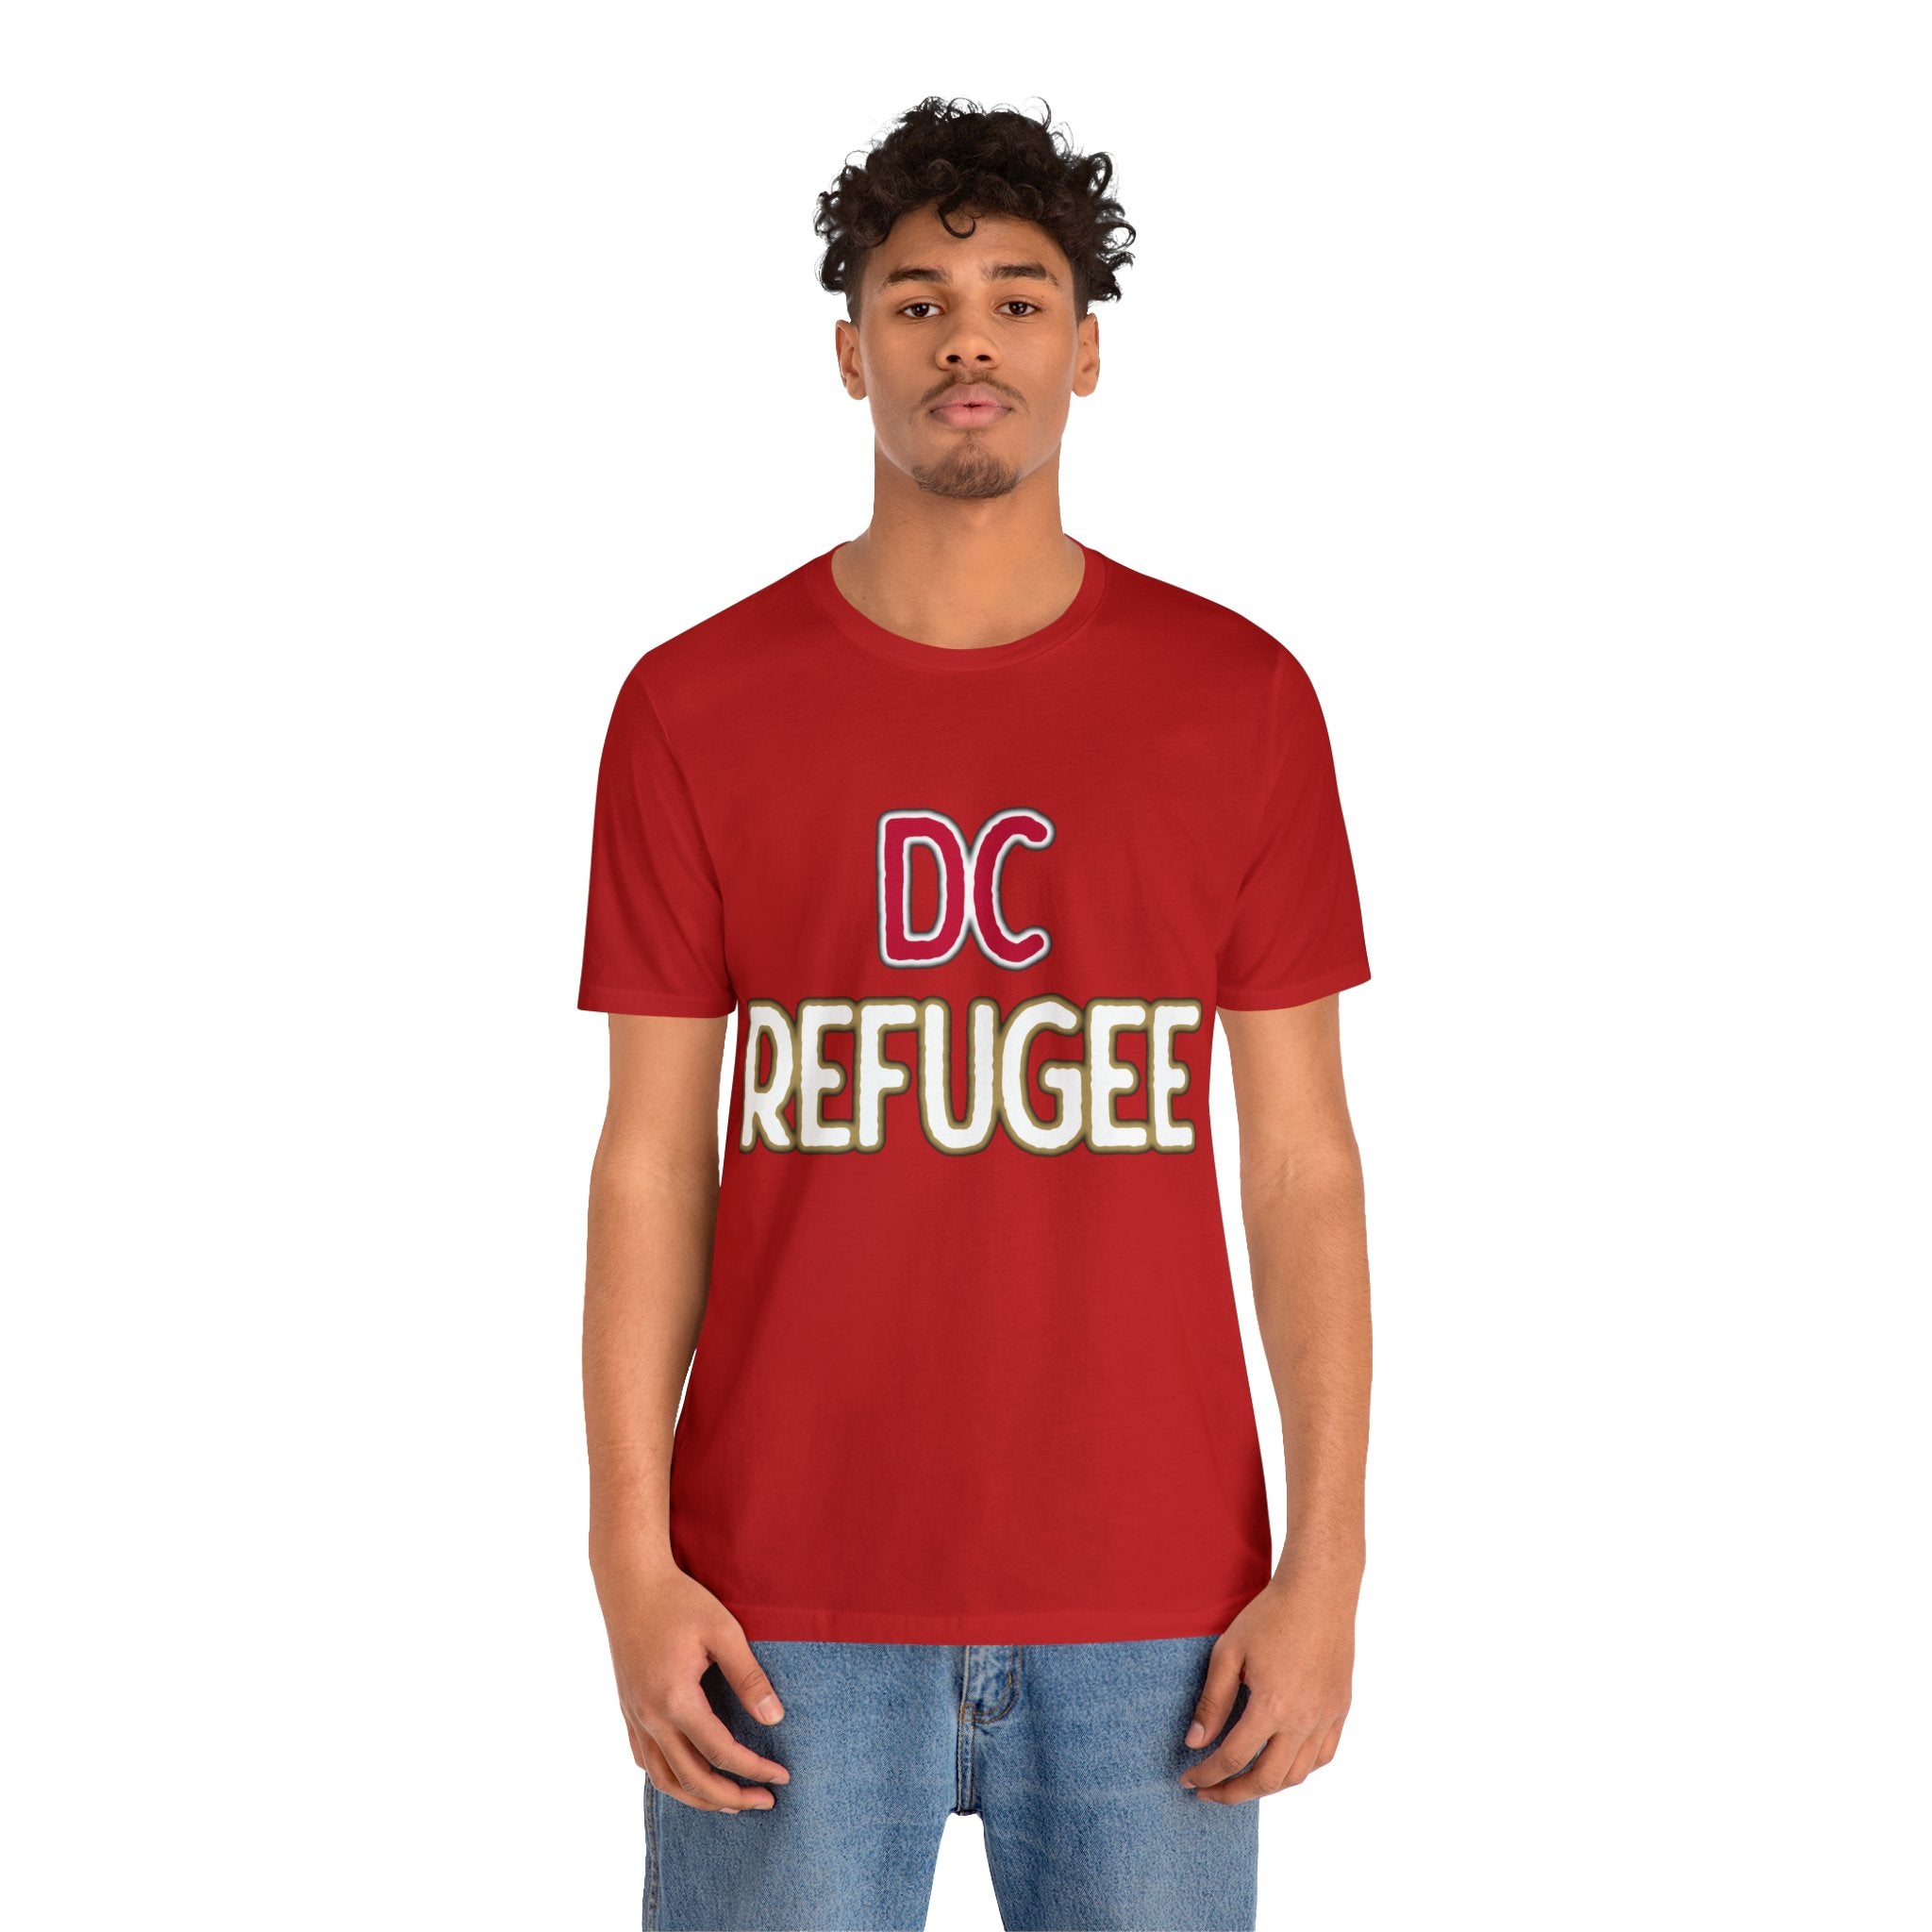 DC Refugee Tee